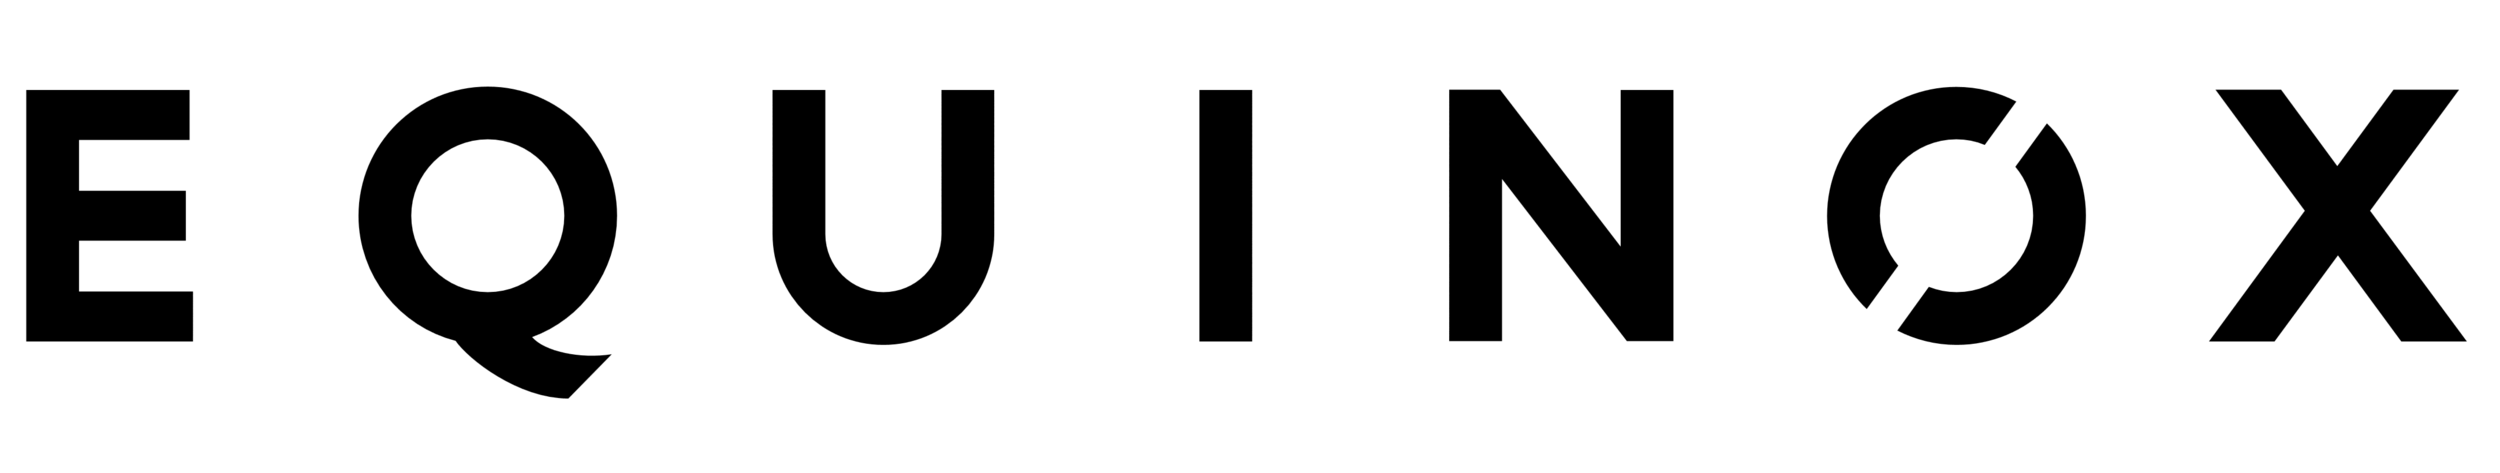 Equinox_logo-1 -- 4330x820.png